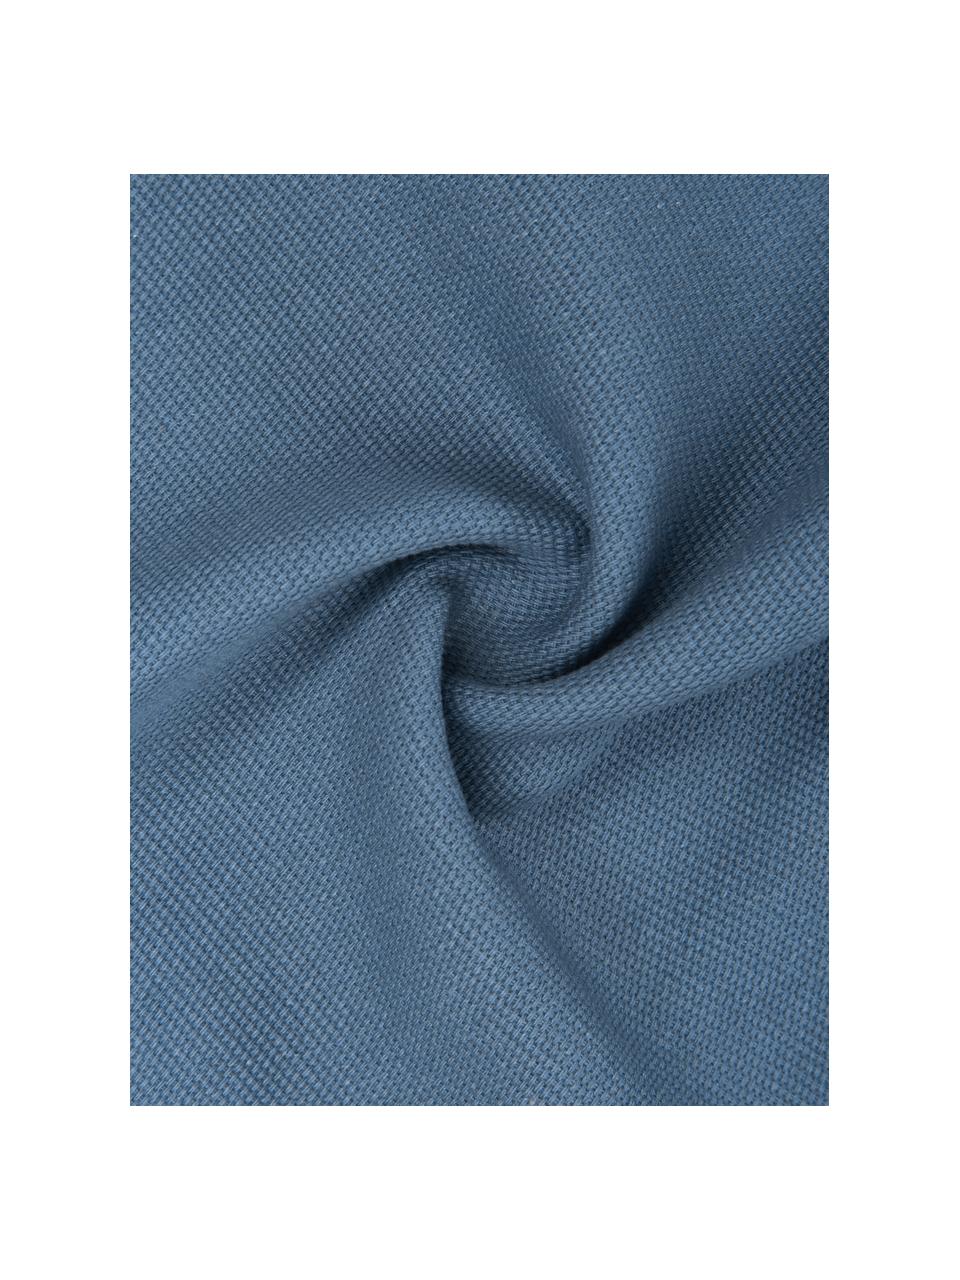 Katoenen kussenhoes Mads in blauw, 100% katoen, Blauw, B 50 x L 50 cm